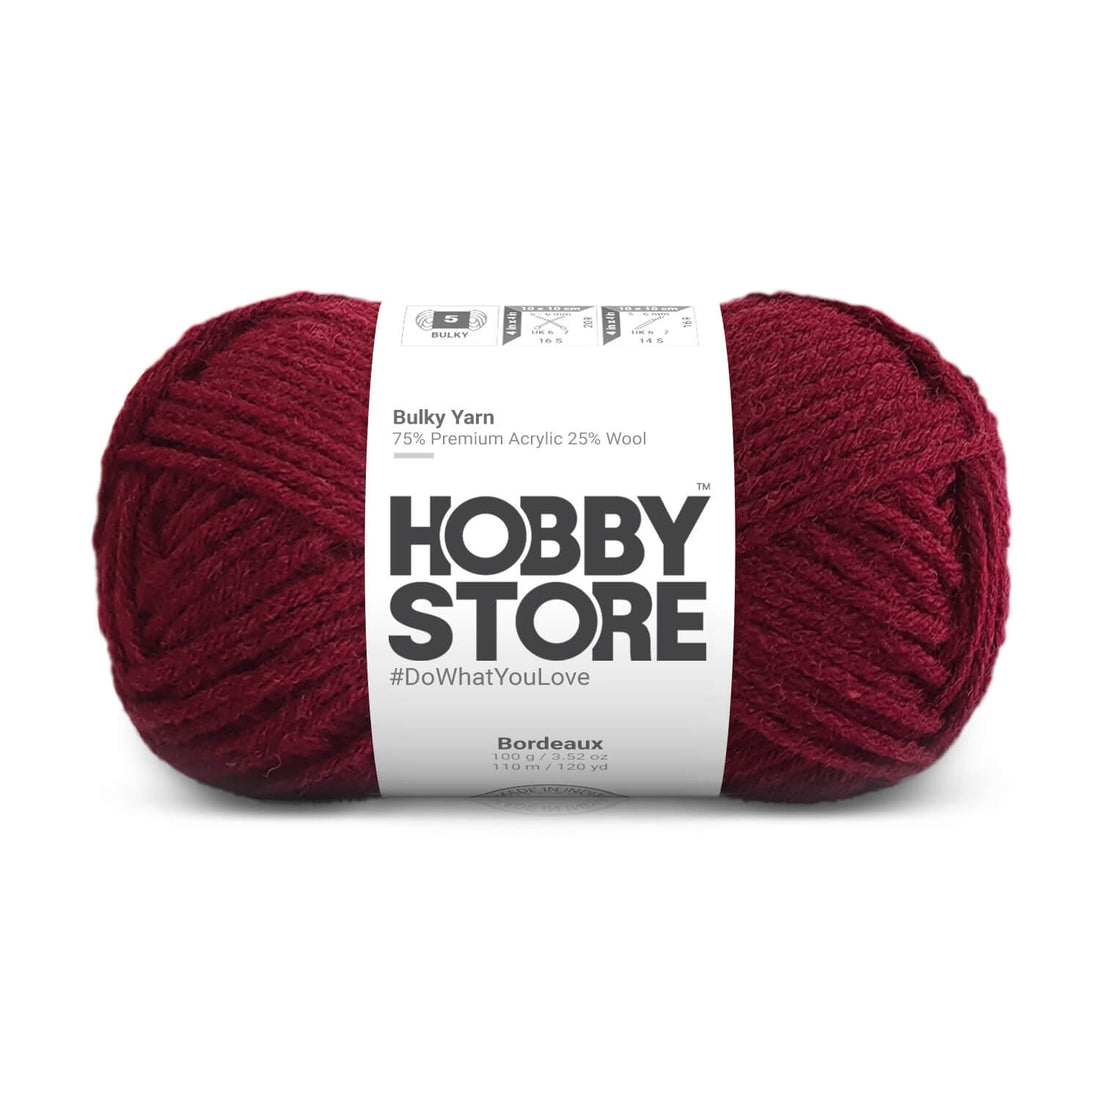 Bulky Yarn by Hobby Store - Bordeaux 6003